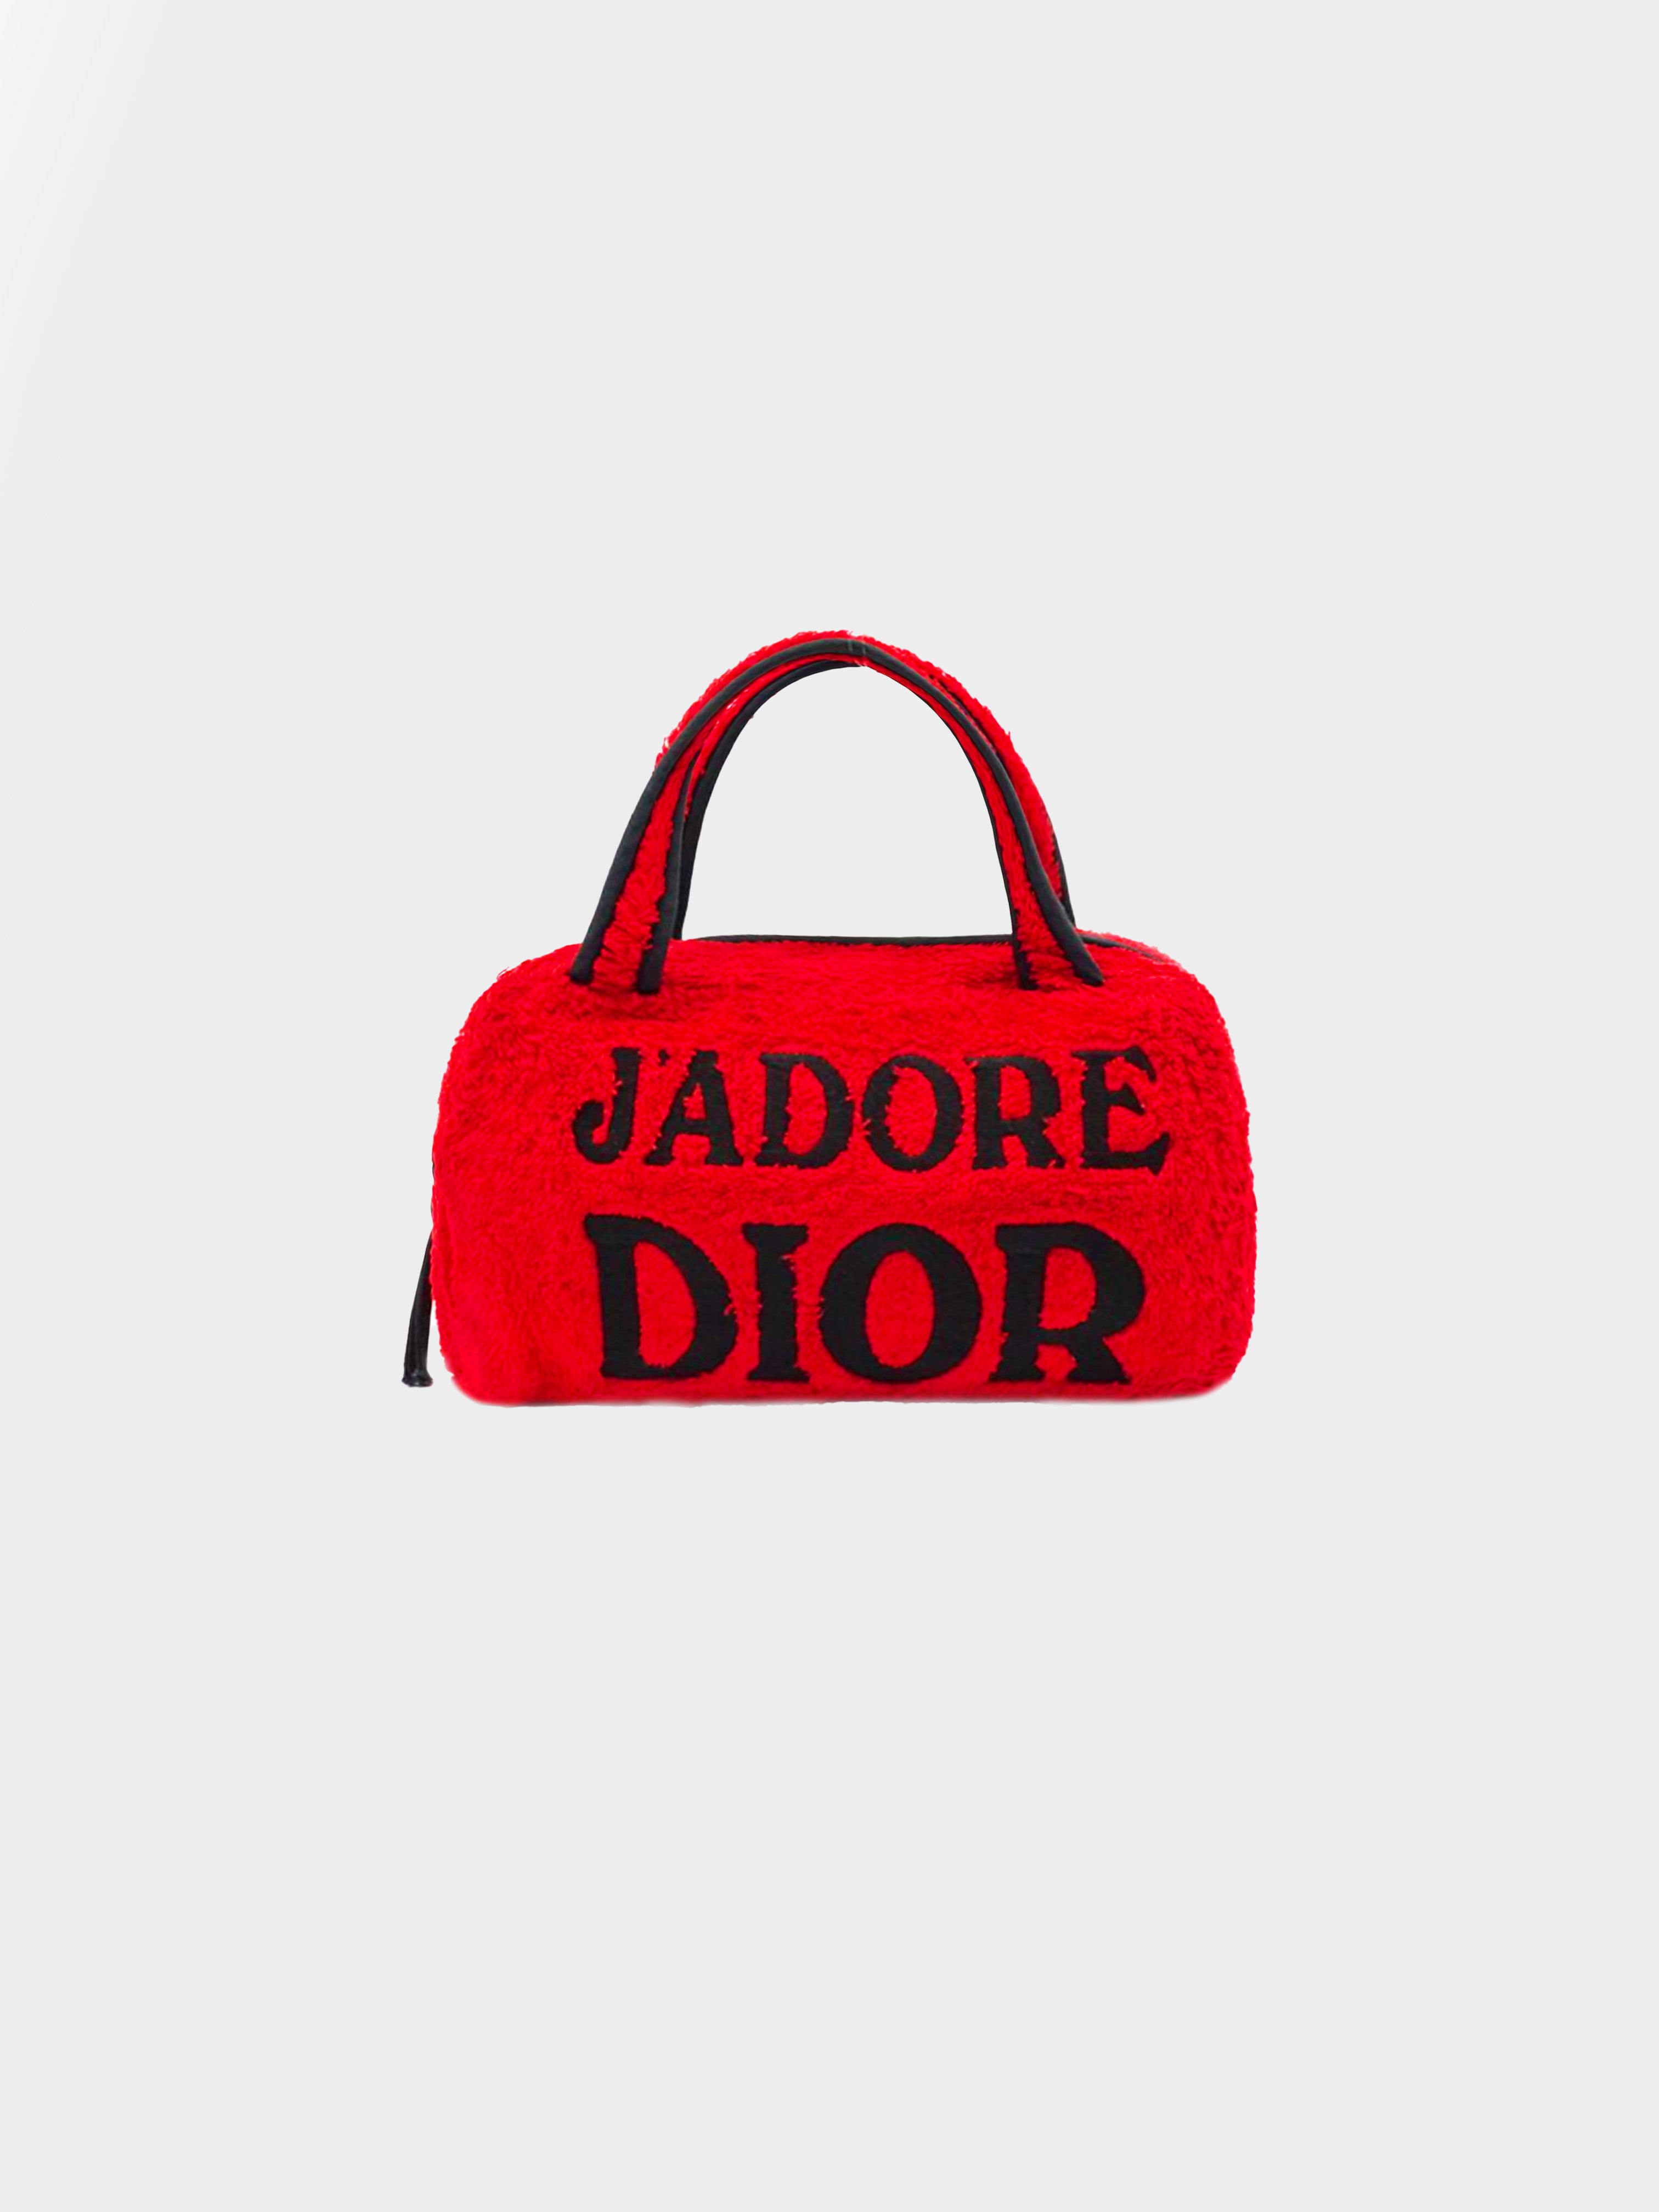 Christian Dior 2000s Red Vinyl Monogram Wallet · INTO